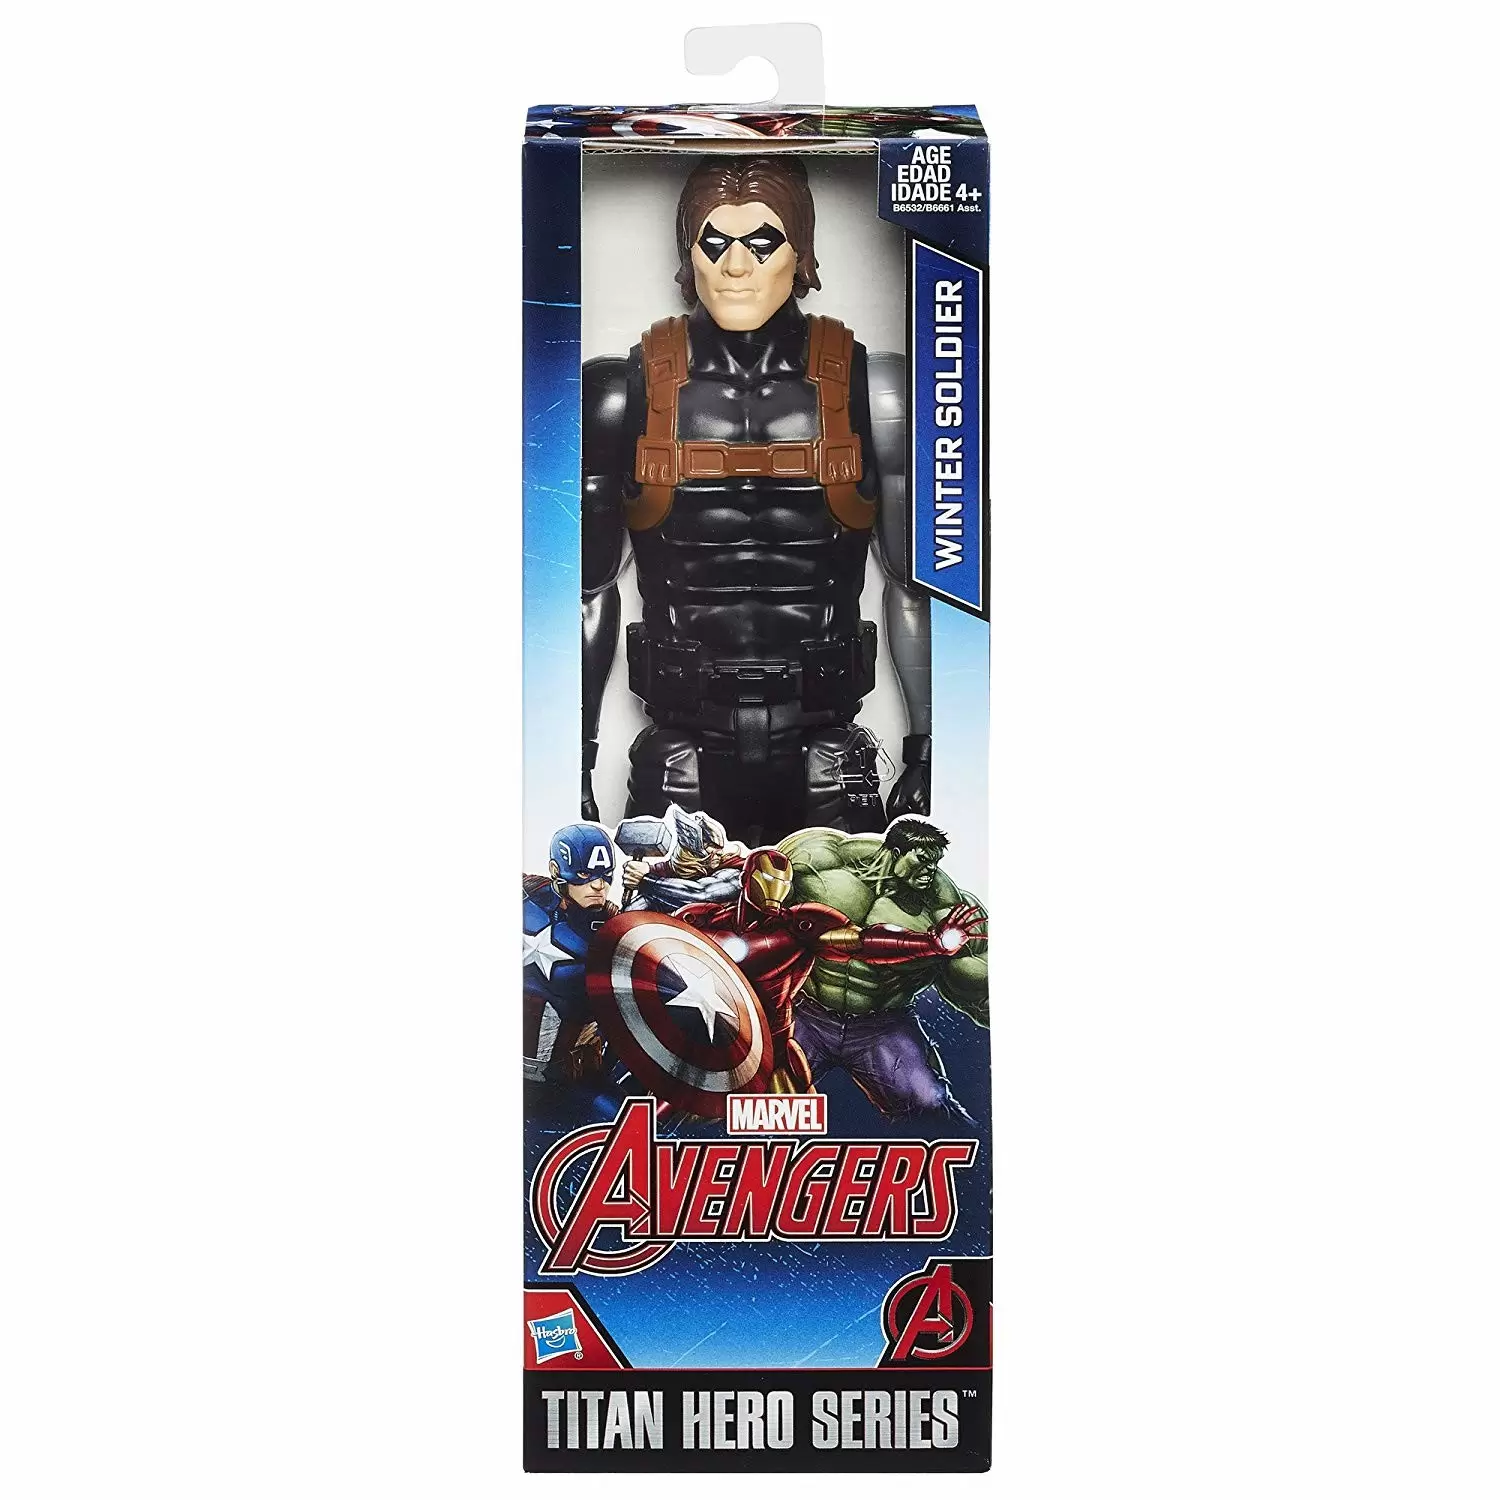 Titan Hero Series - Avengers - Winter Soldier